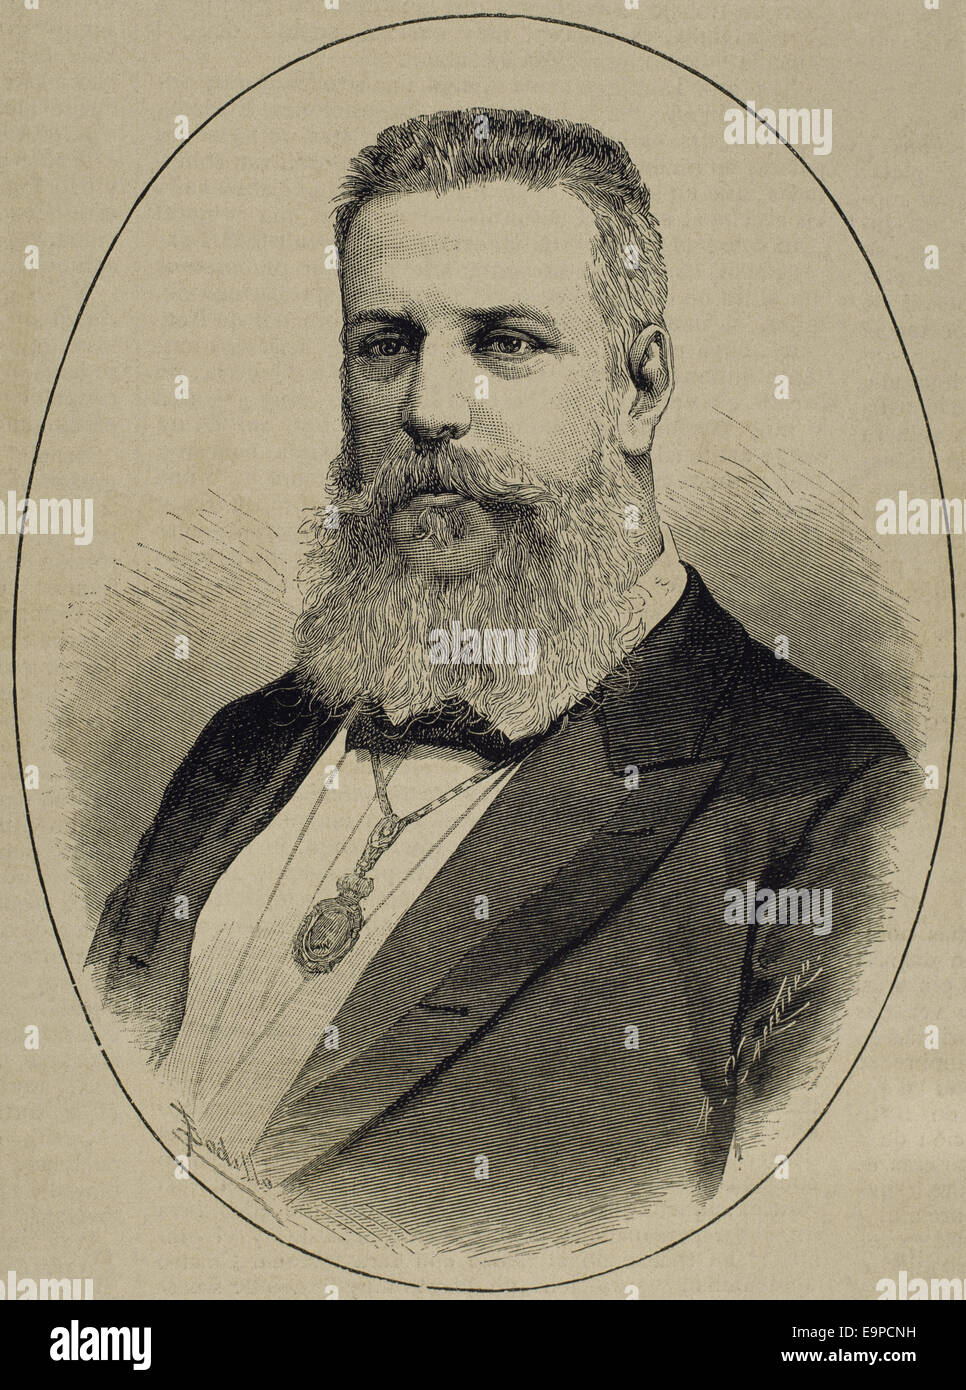 Santiago Estrada (1841-1891). Writer and journalist. Engraving. Stock Photo